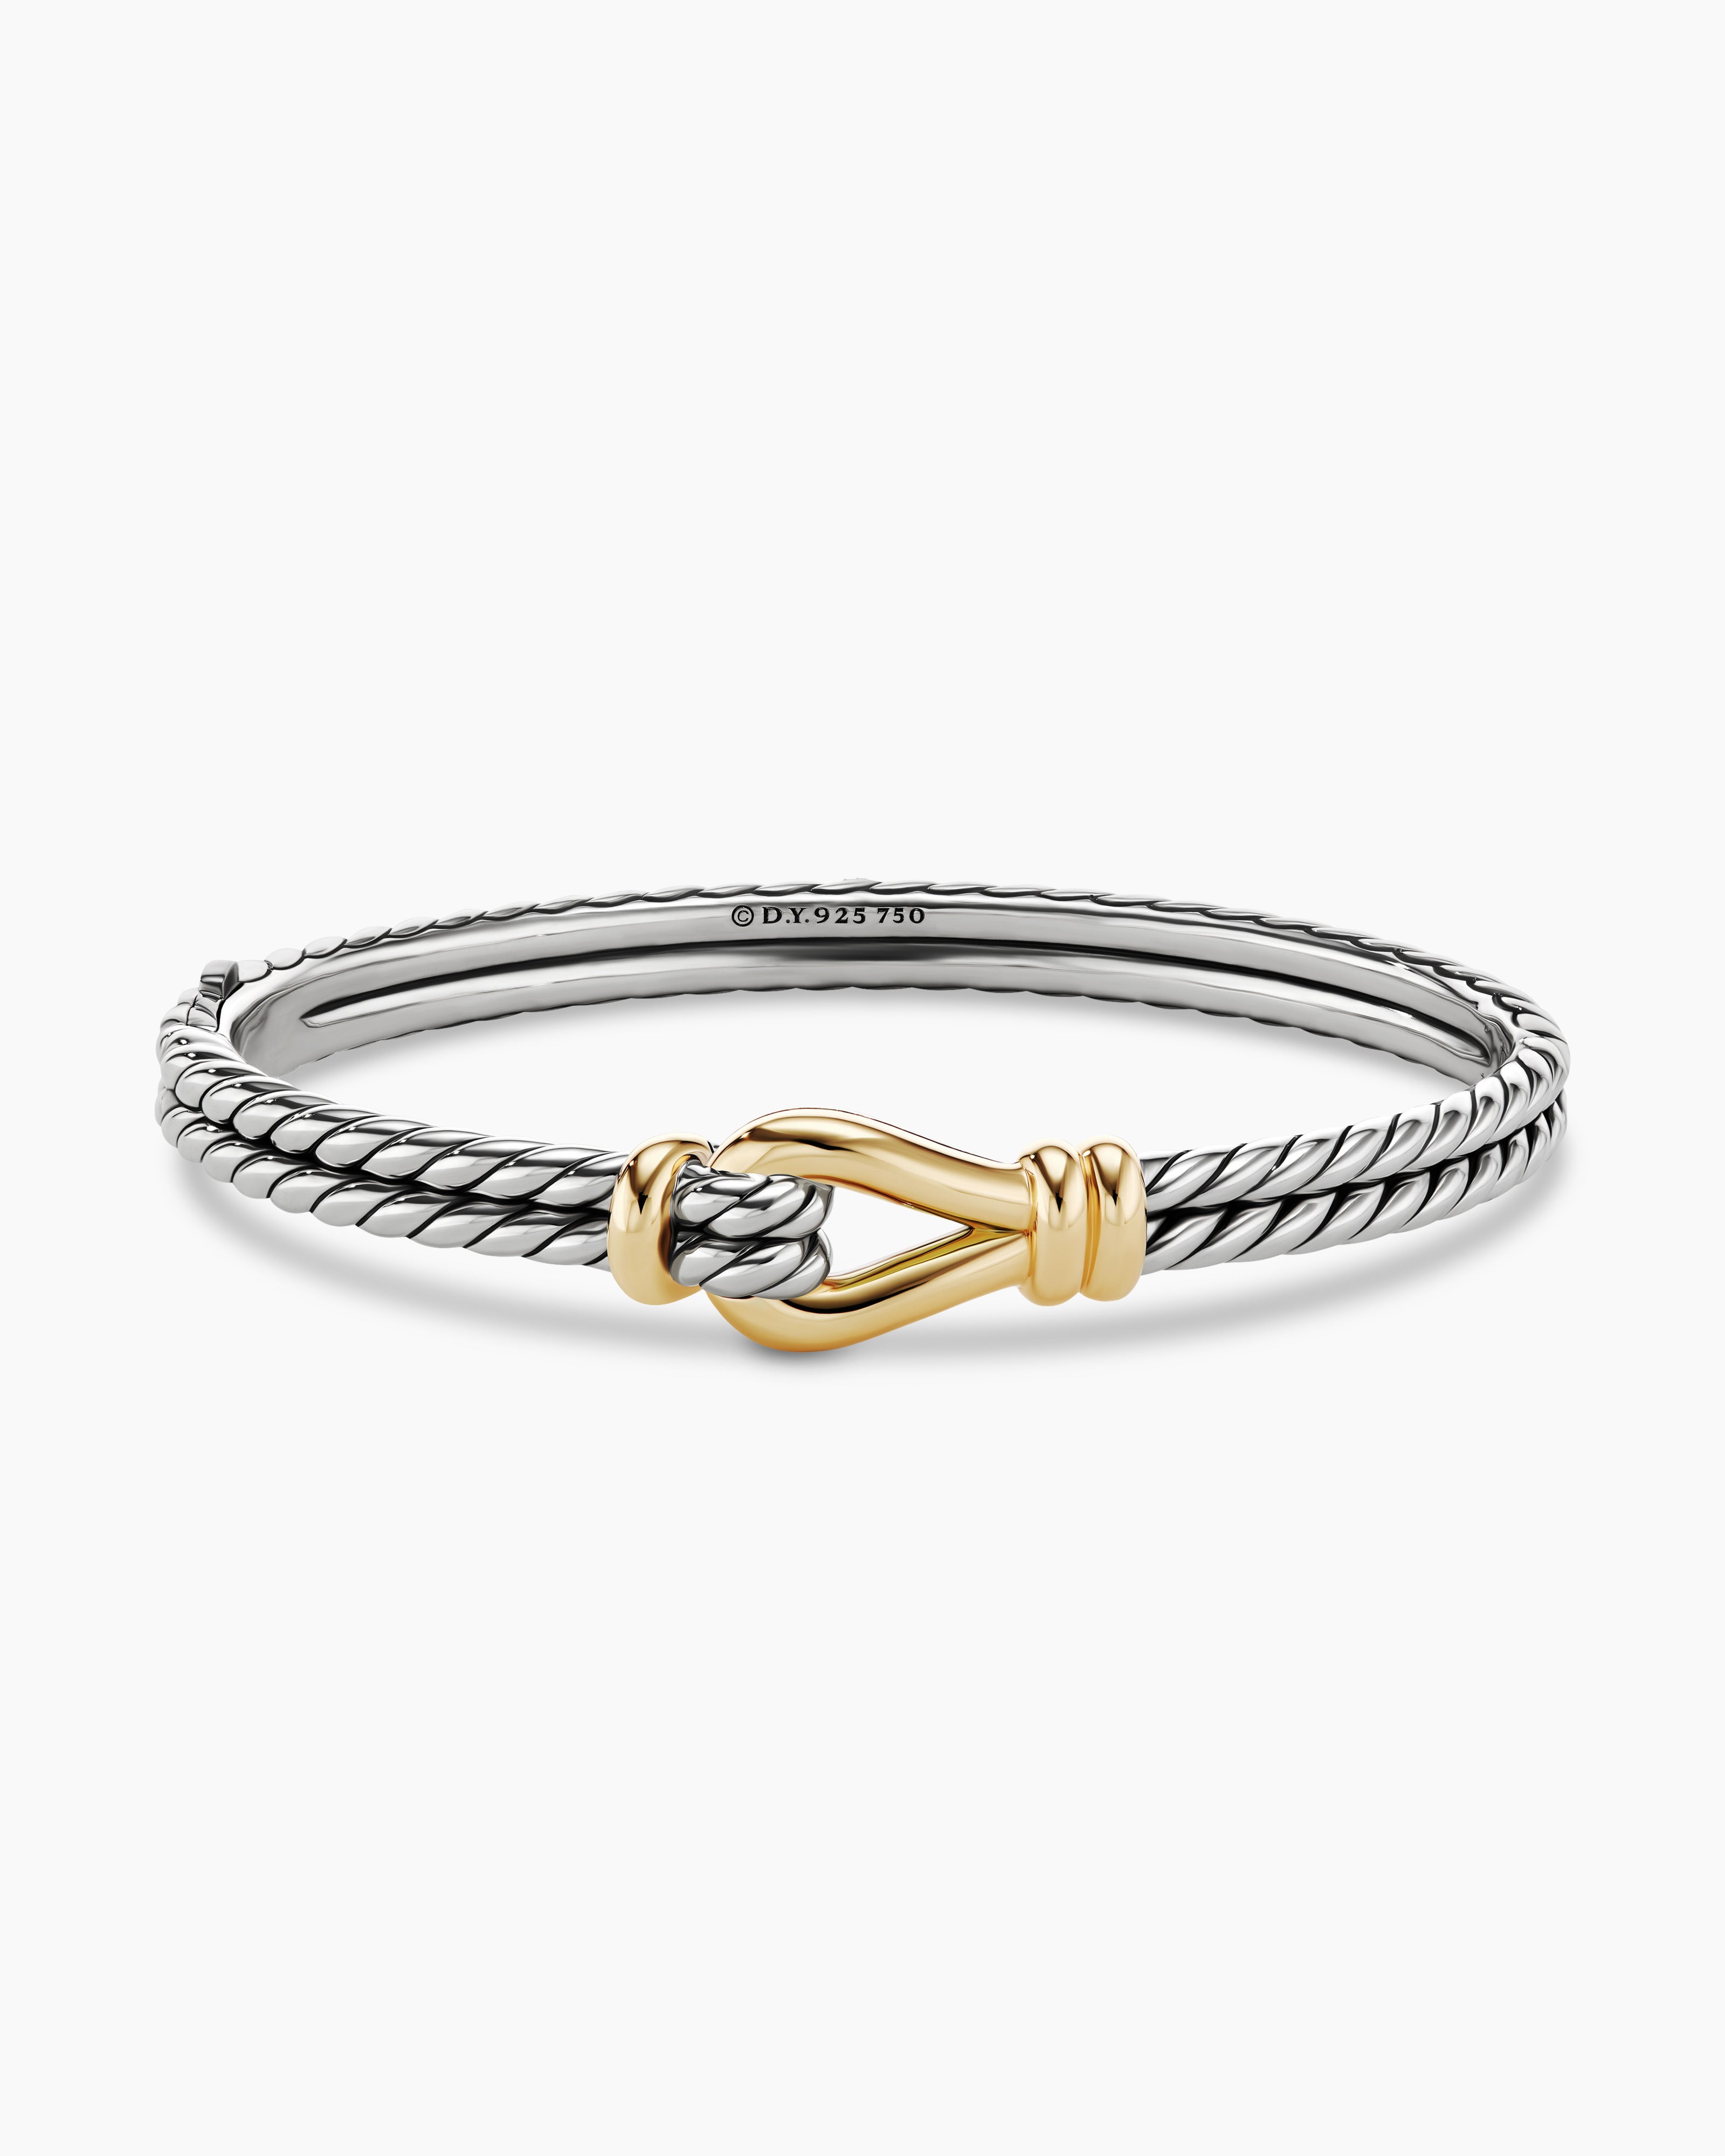 David Yurman Thoroughbred Loop Bracelet with 18K Yellow Gold in Silver